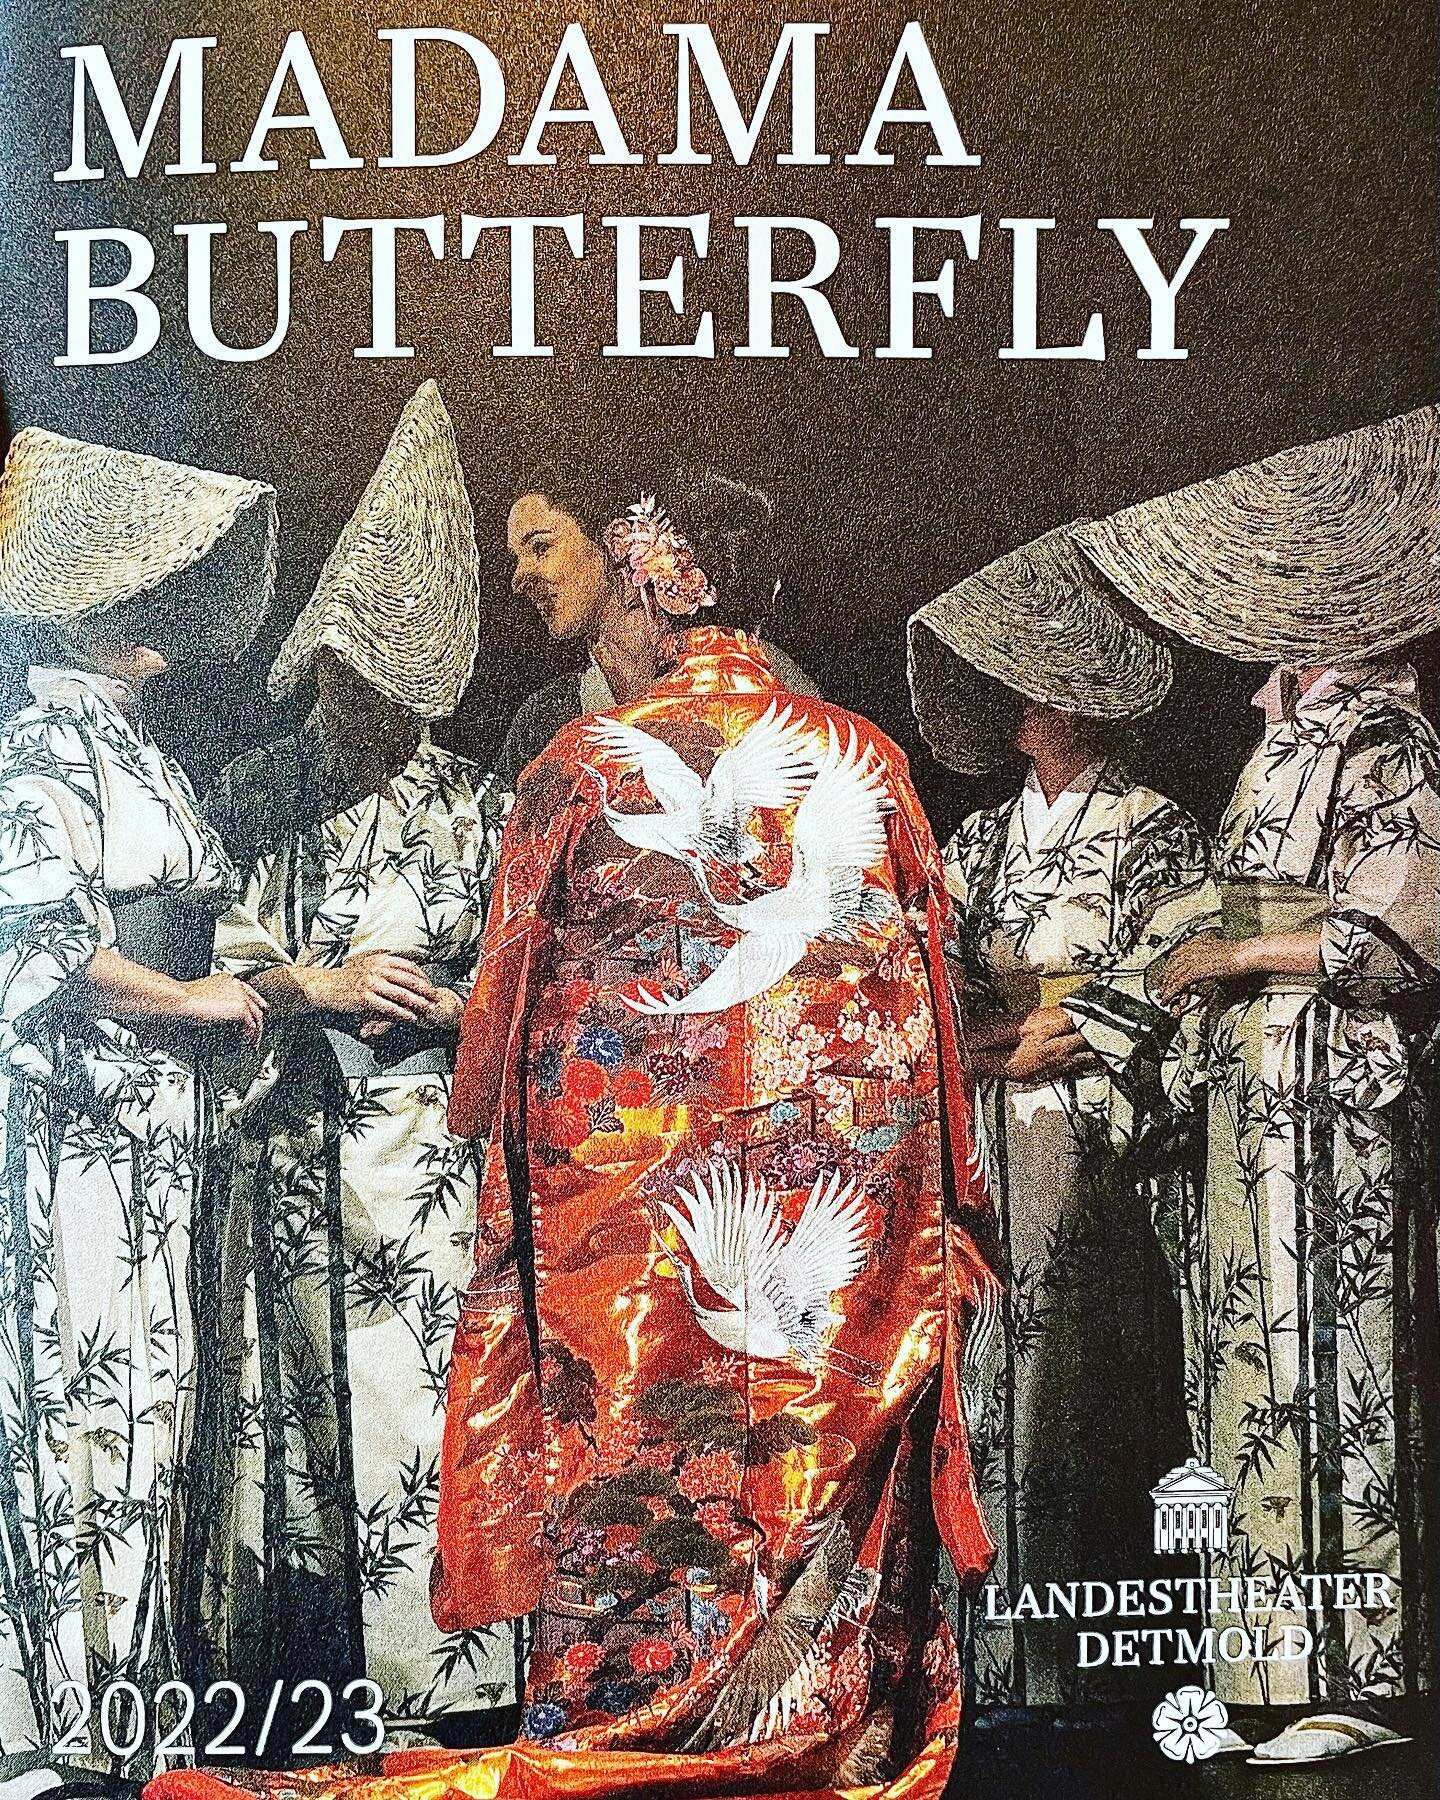 Premiere tonight Madama Butterfly. Toi toi toi per tutti @landestheaterdetmold @das_opernmagazin @wdr #opera #puccini #italy #germany #lippe @lz.de #conductor